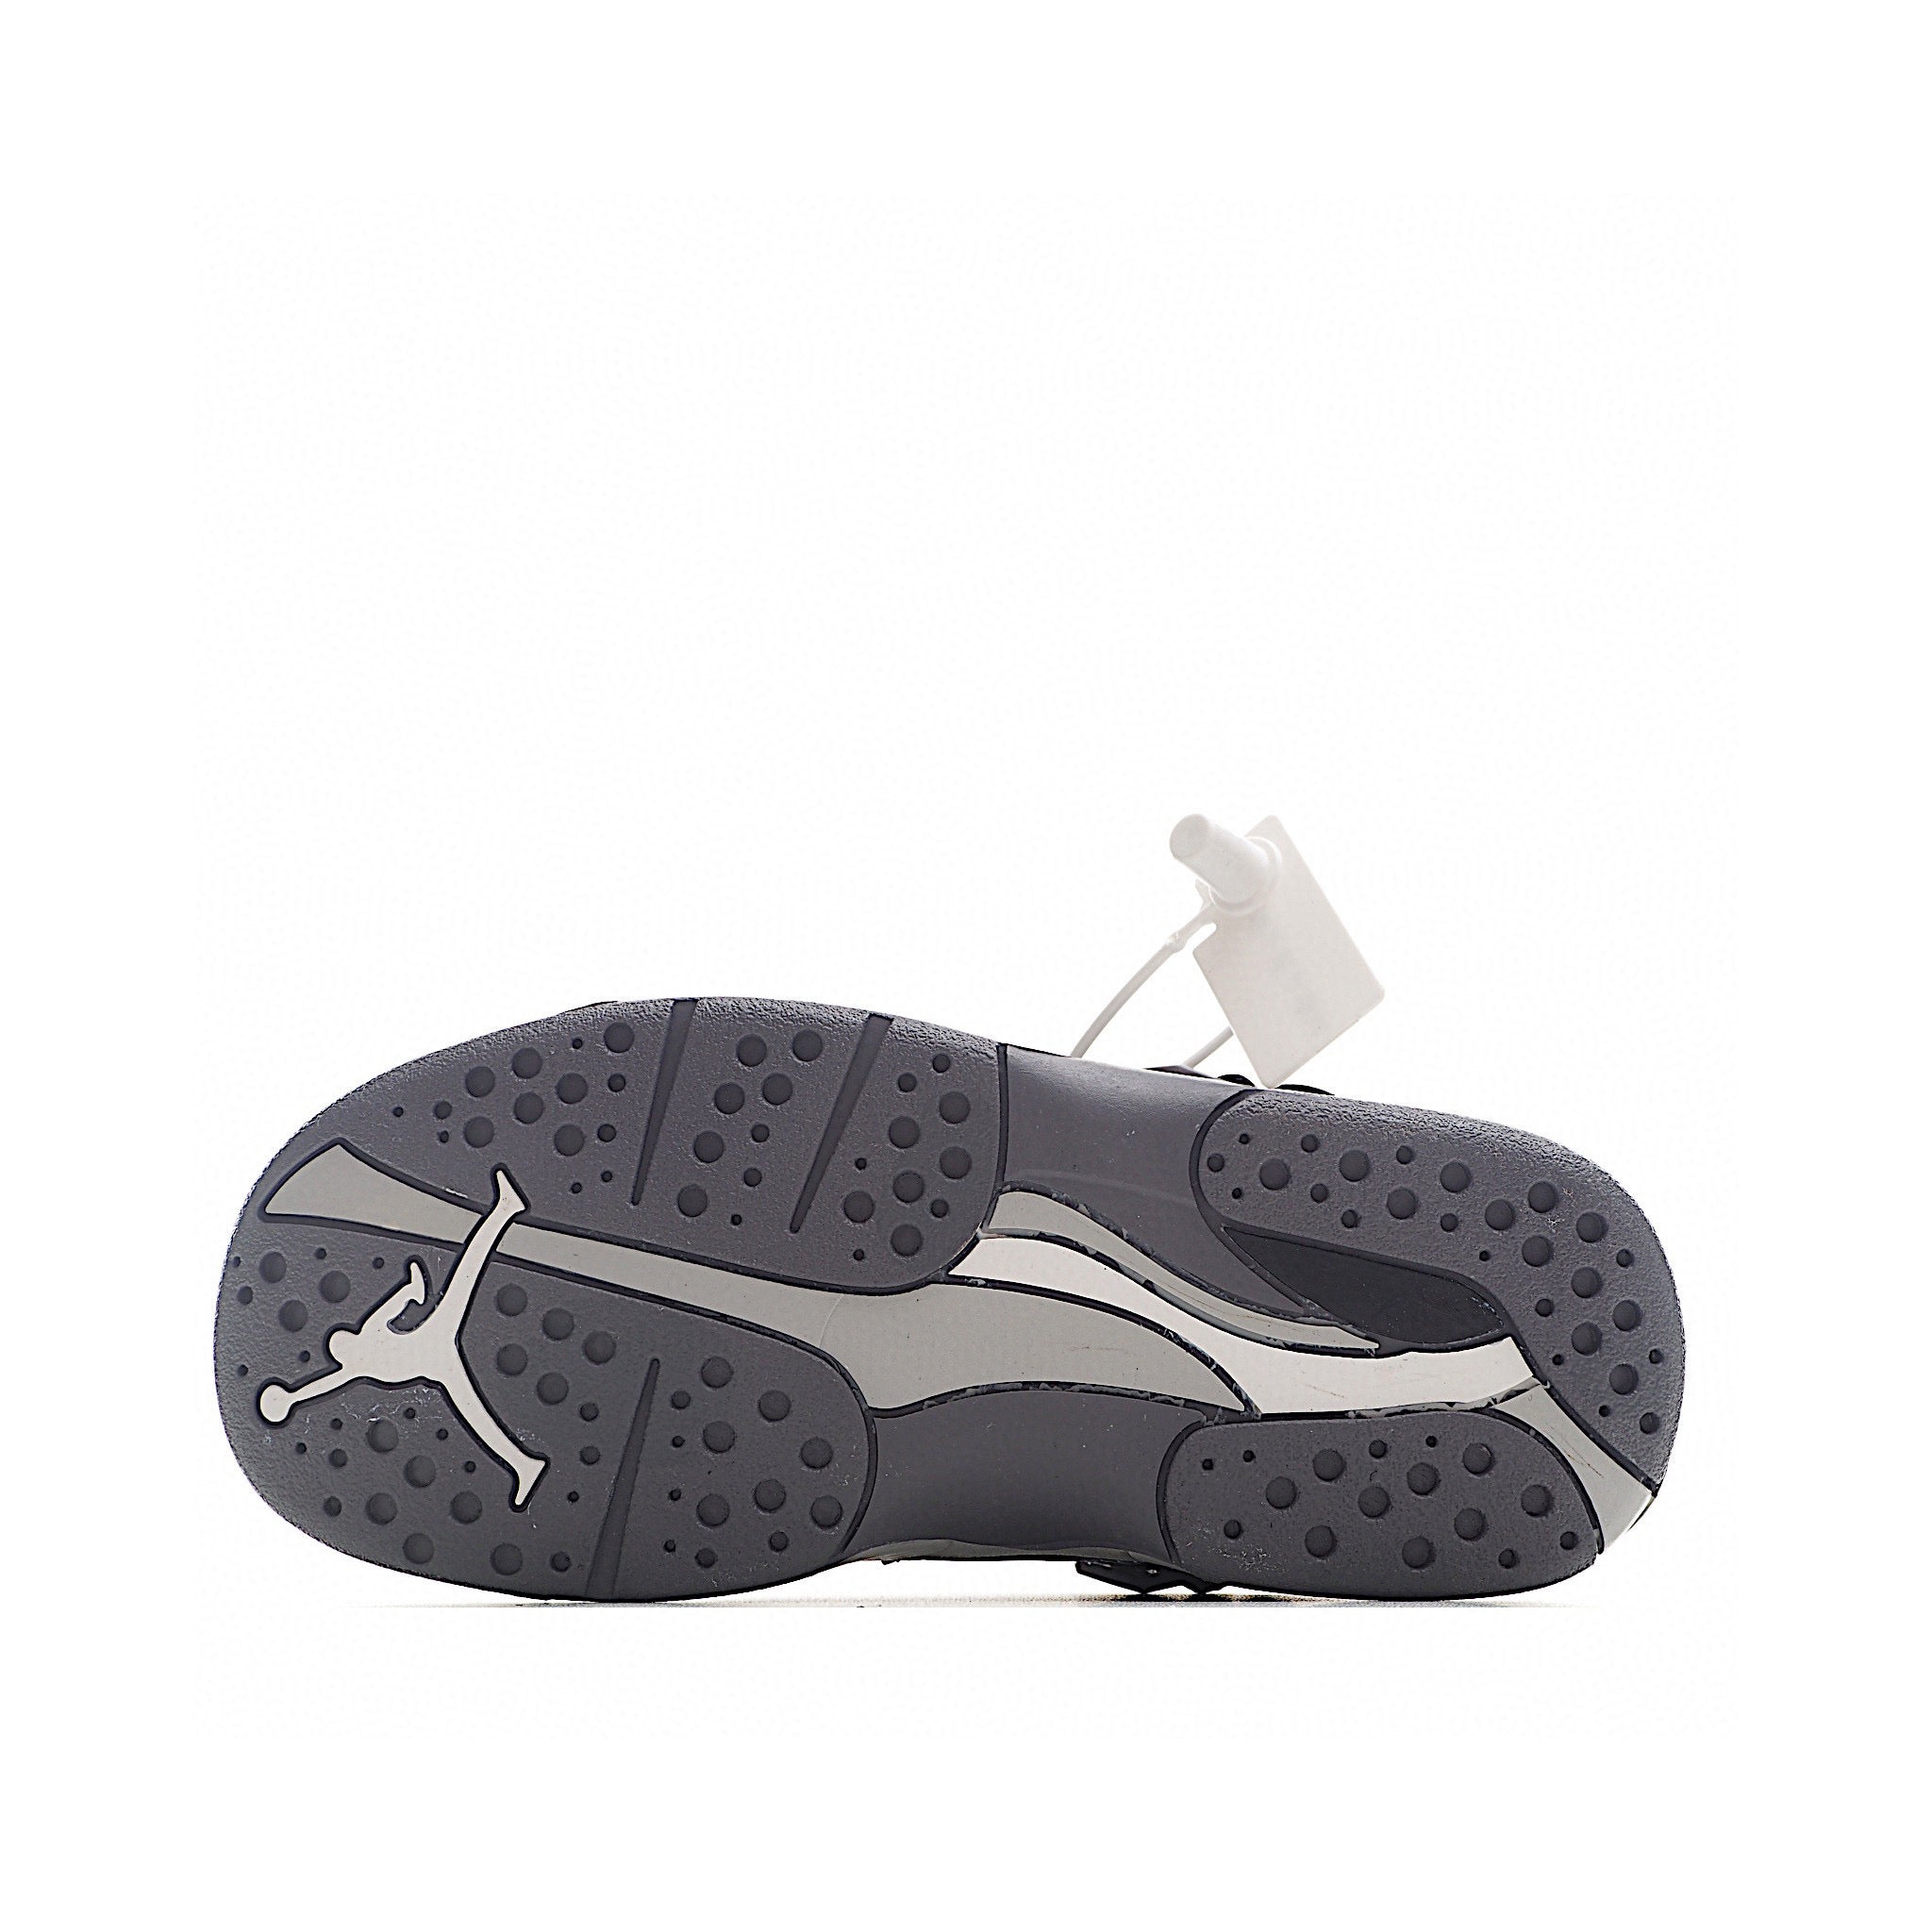 Nike air jordan 8 retro chaussures gris foncé